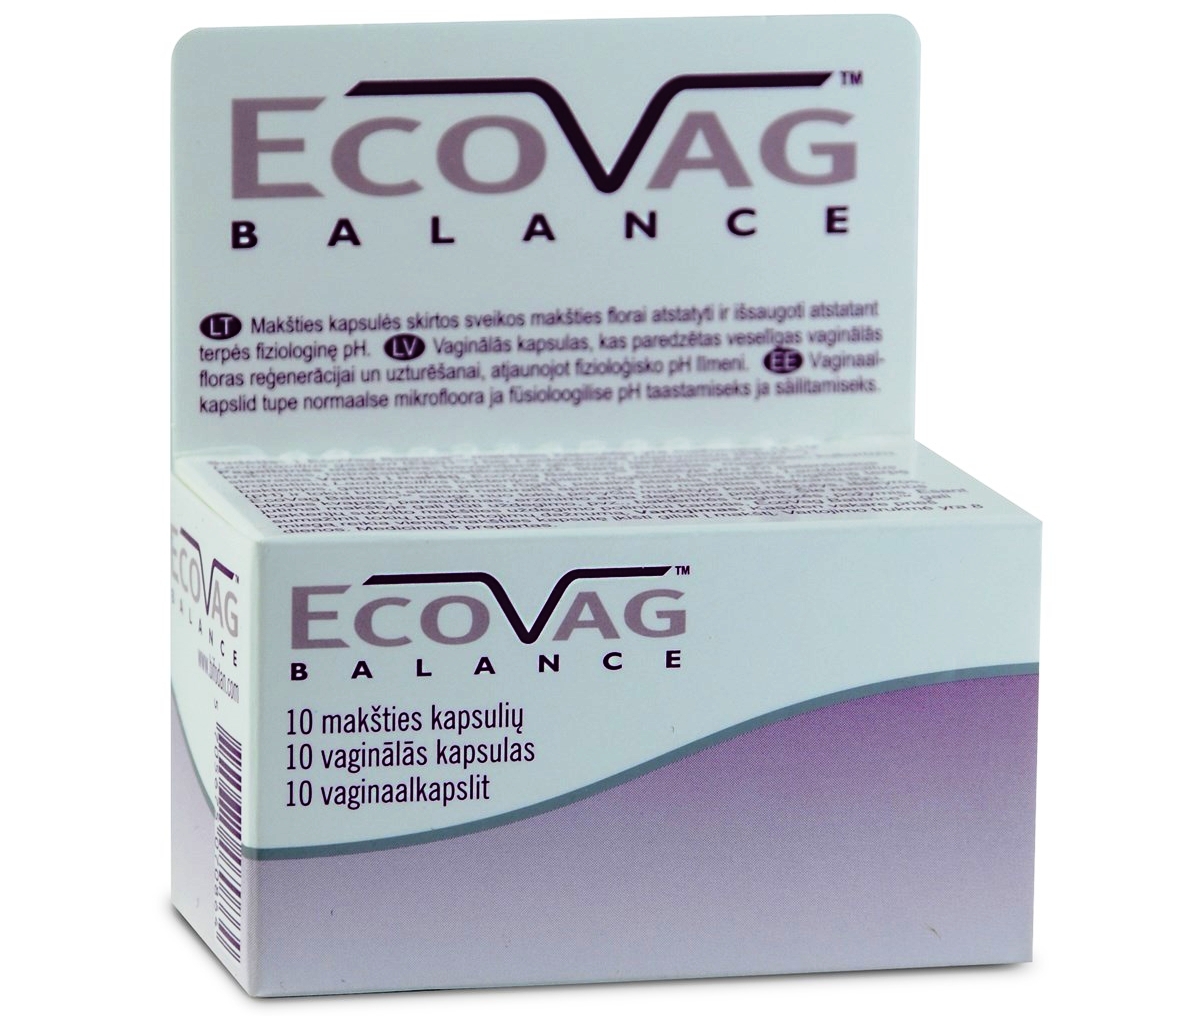 Ecovag Balance Vaginal ebay betterbeautybureau